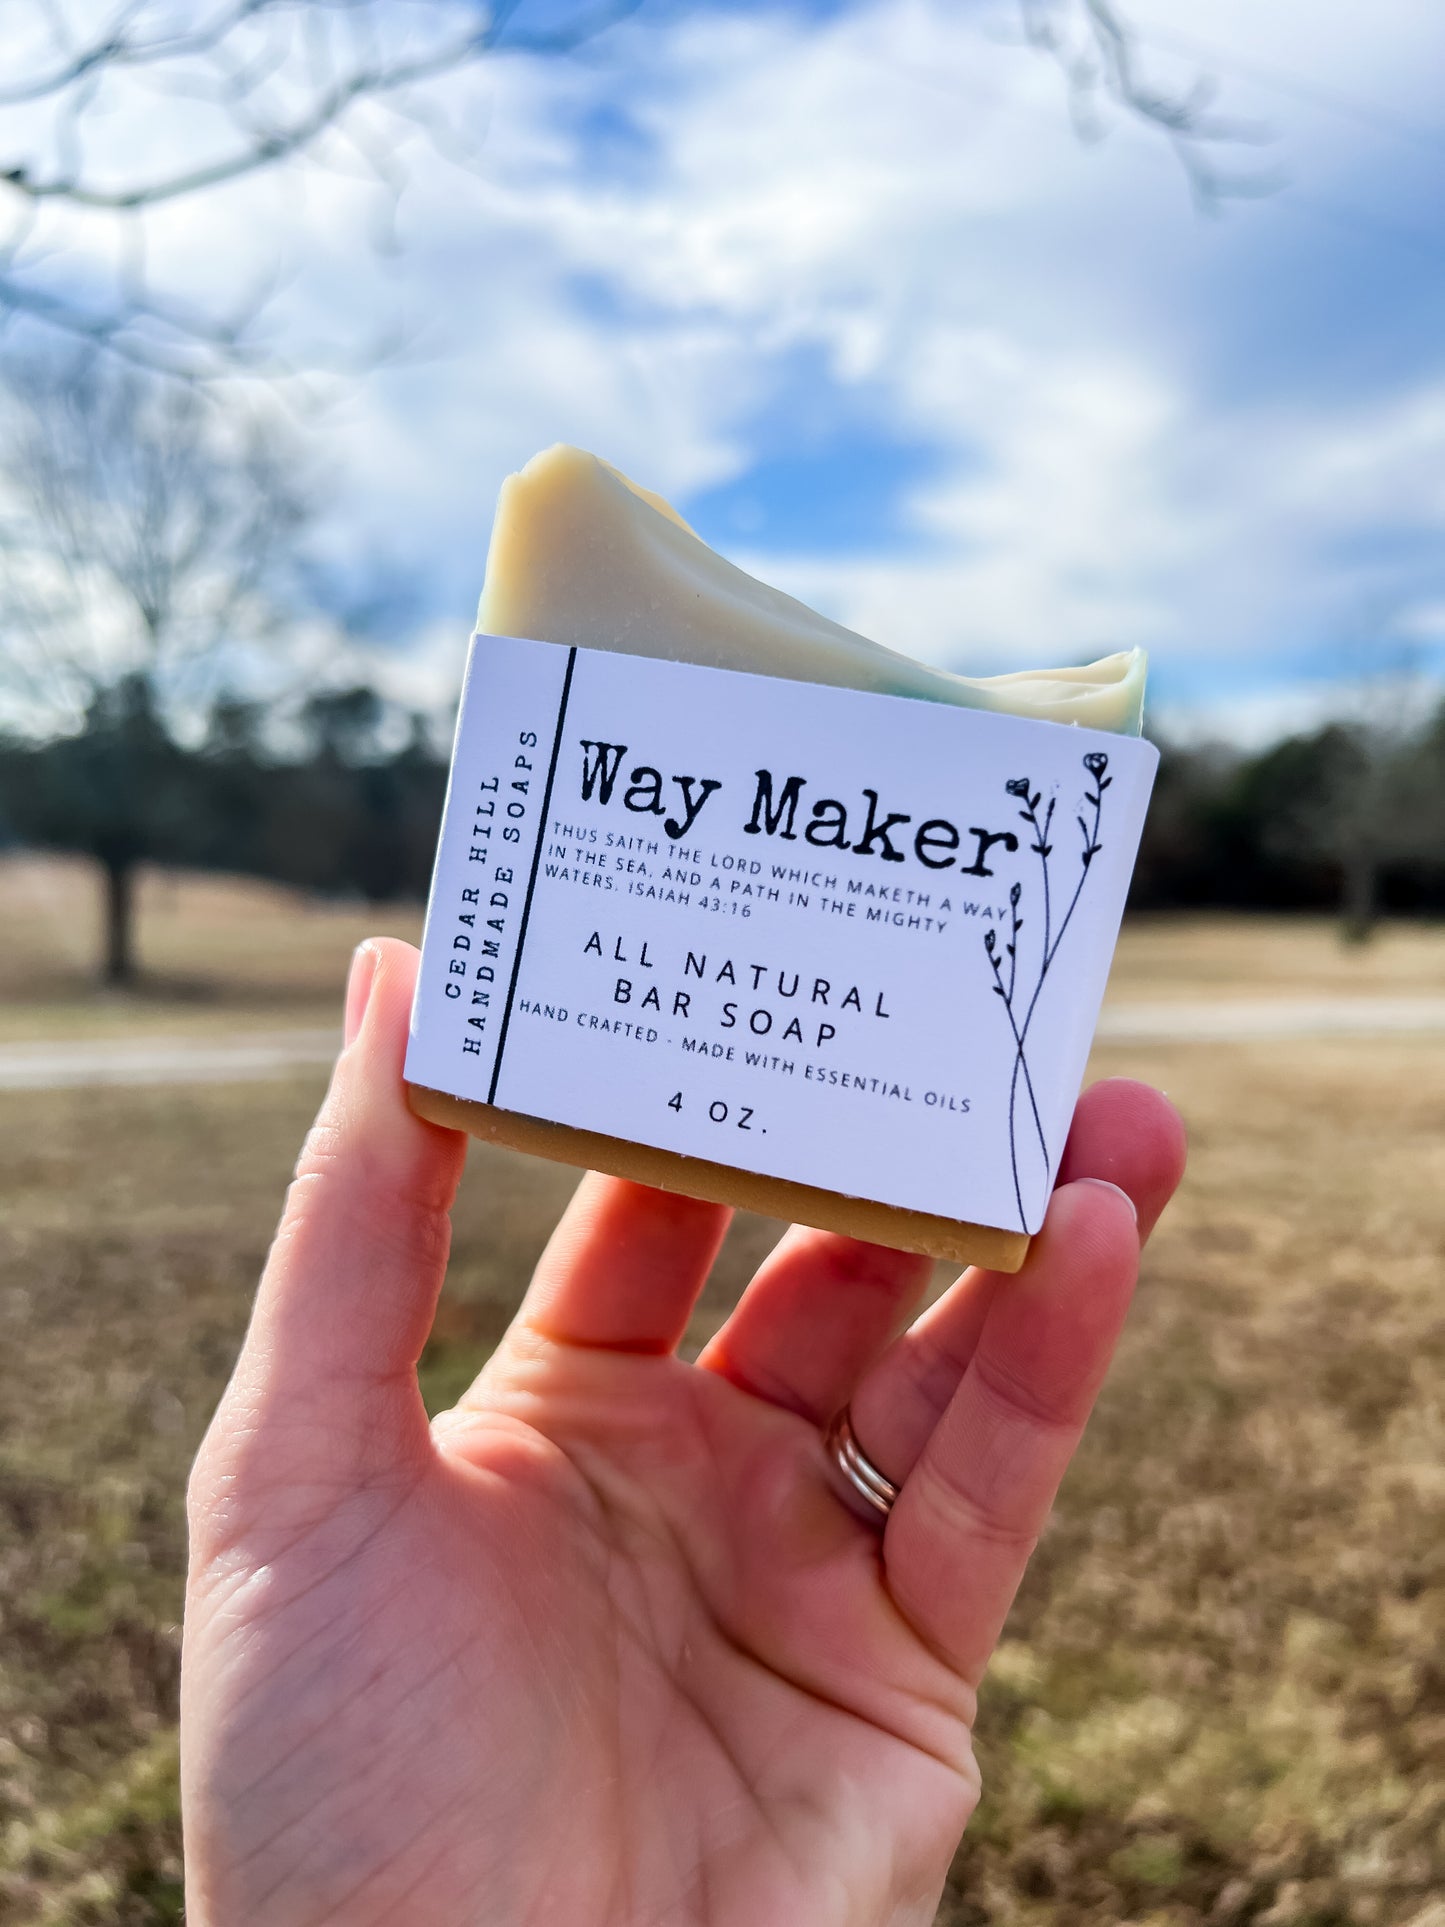 Way Maker Handmade Soap 4oz